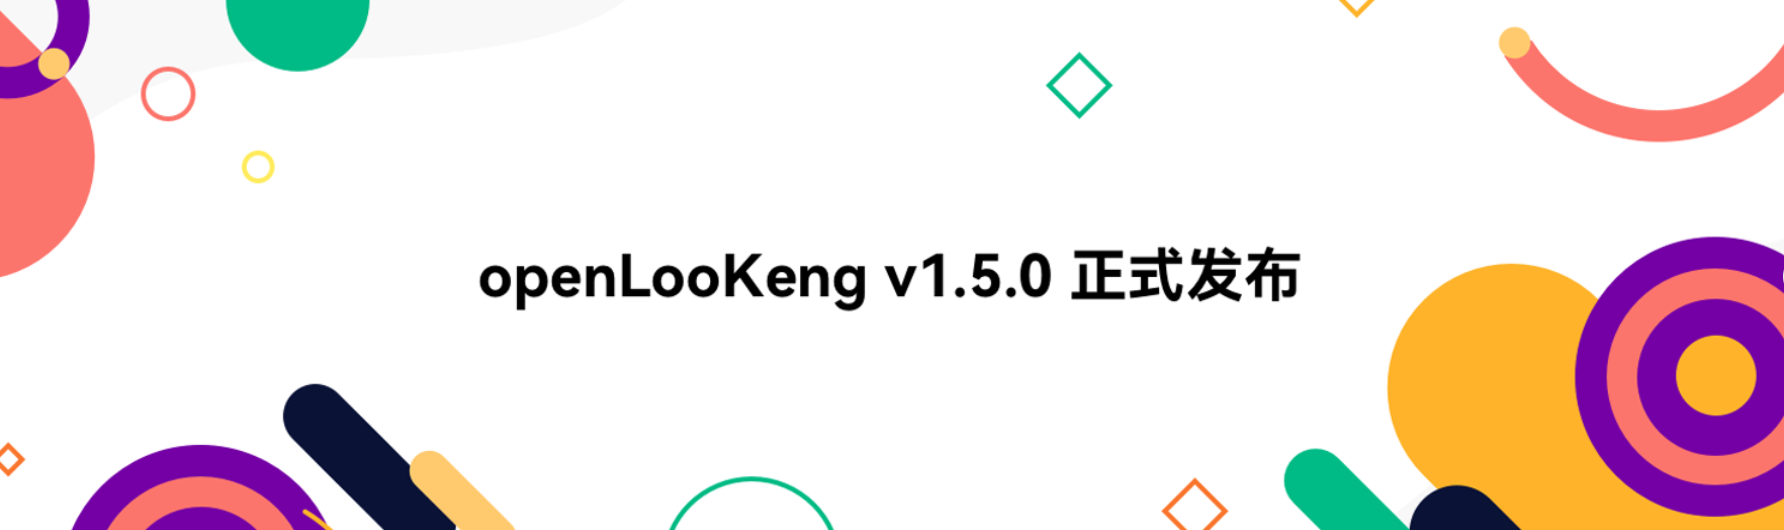 openLooKeng1.5.0新版本正式上线